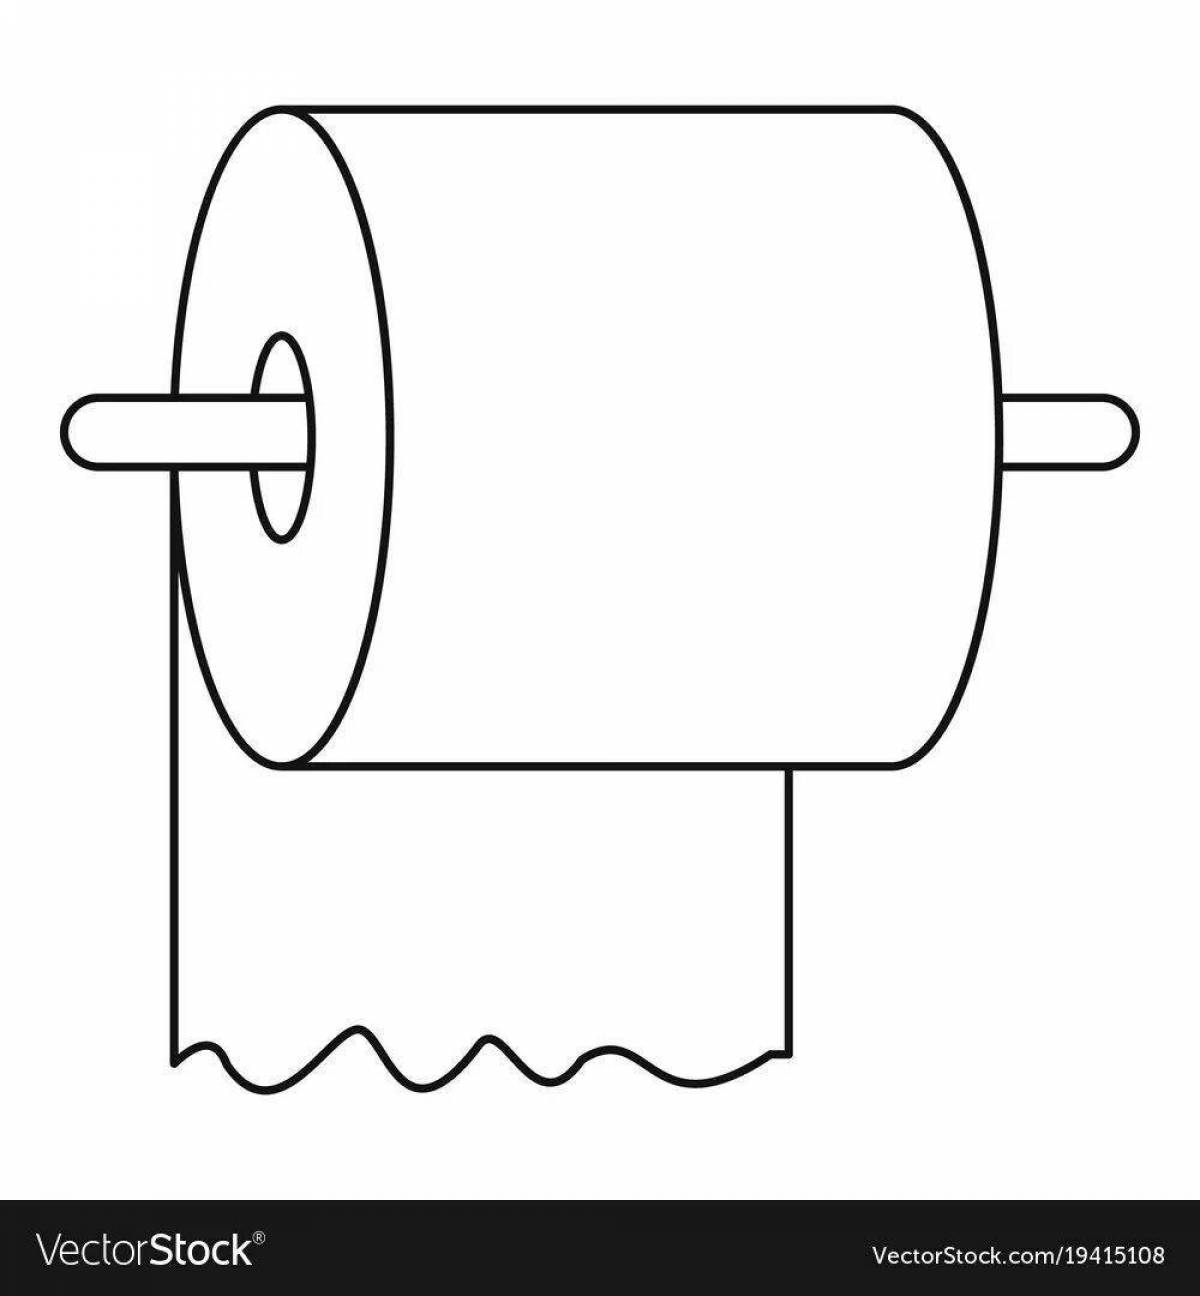 Toilet paper #6